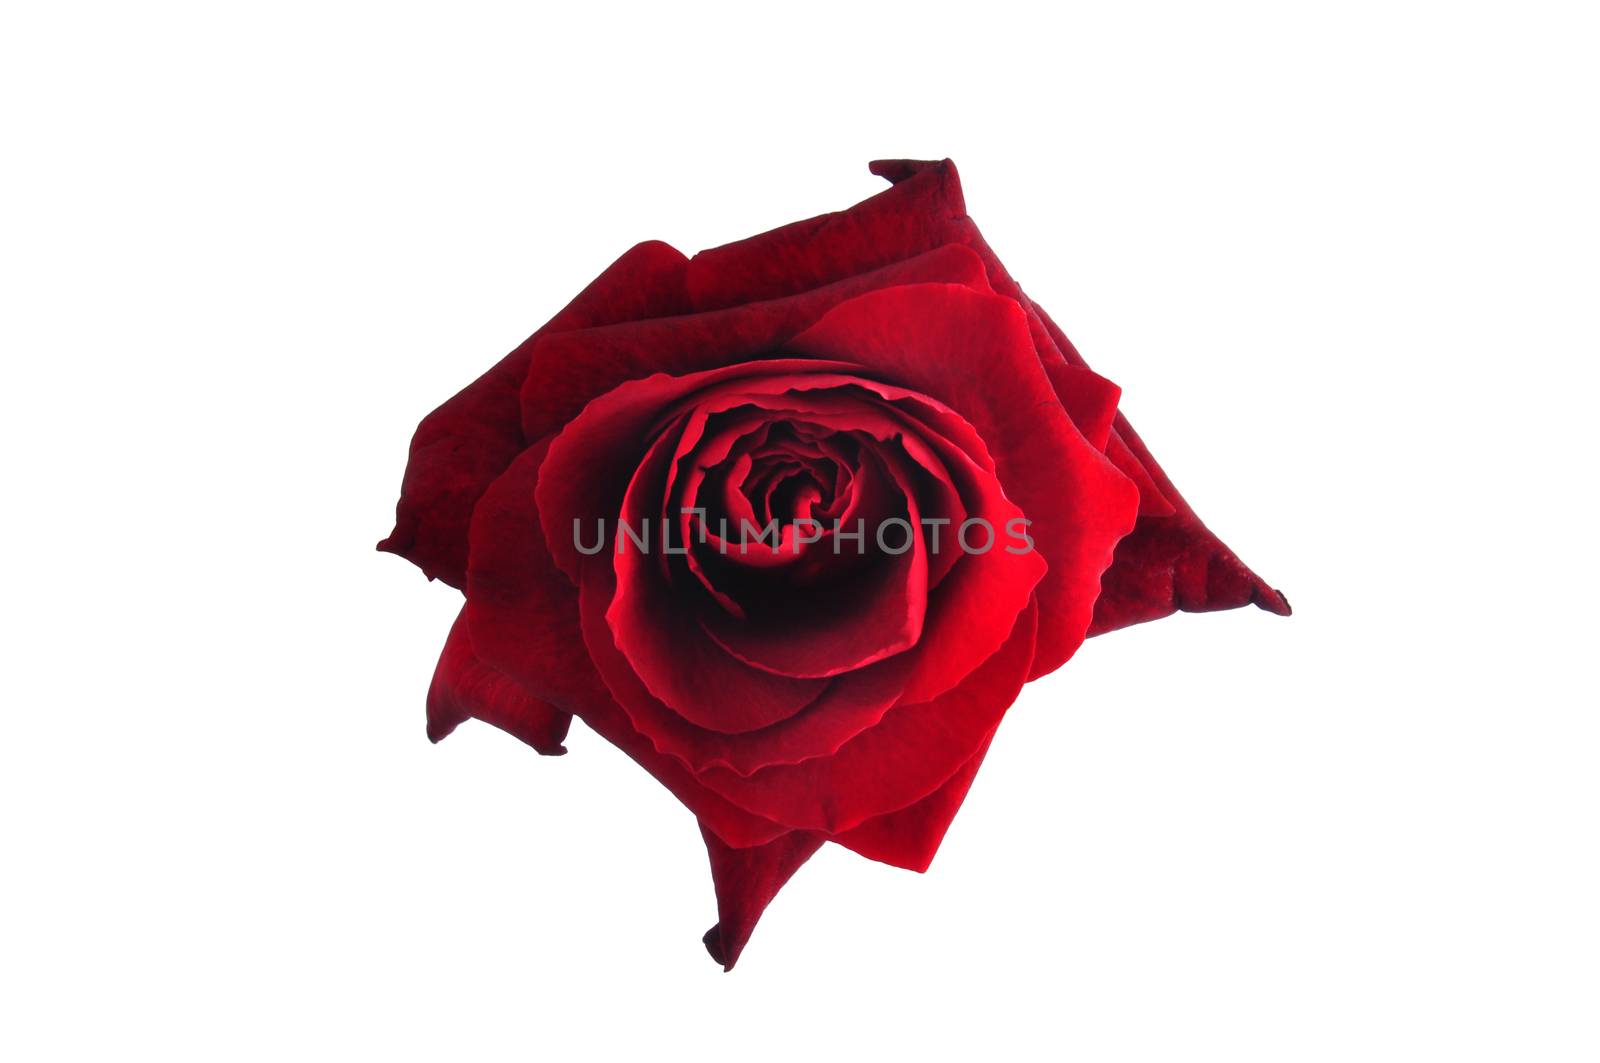 Rose flower by rbiedermann